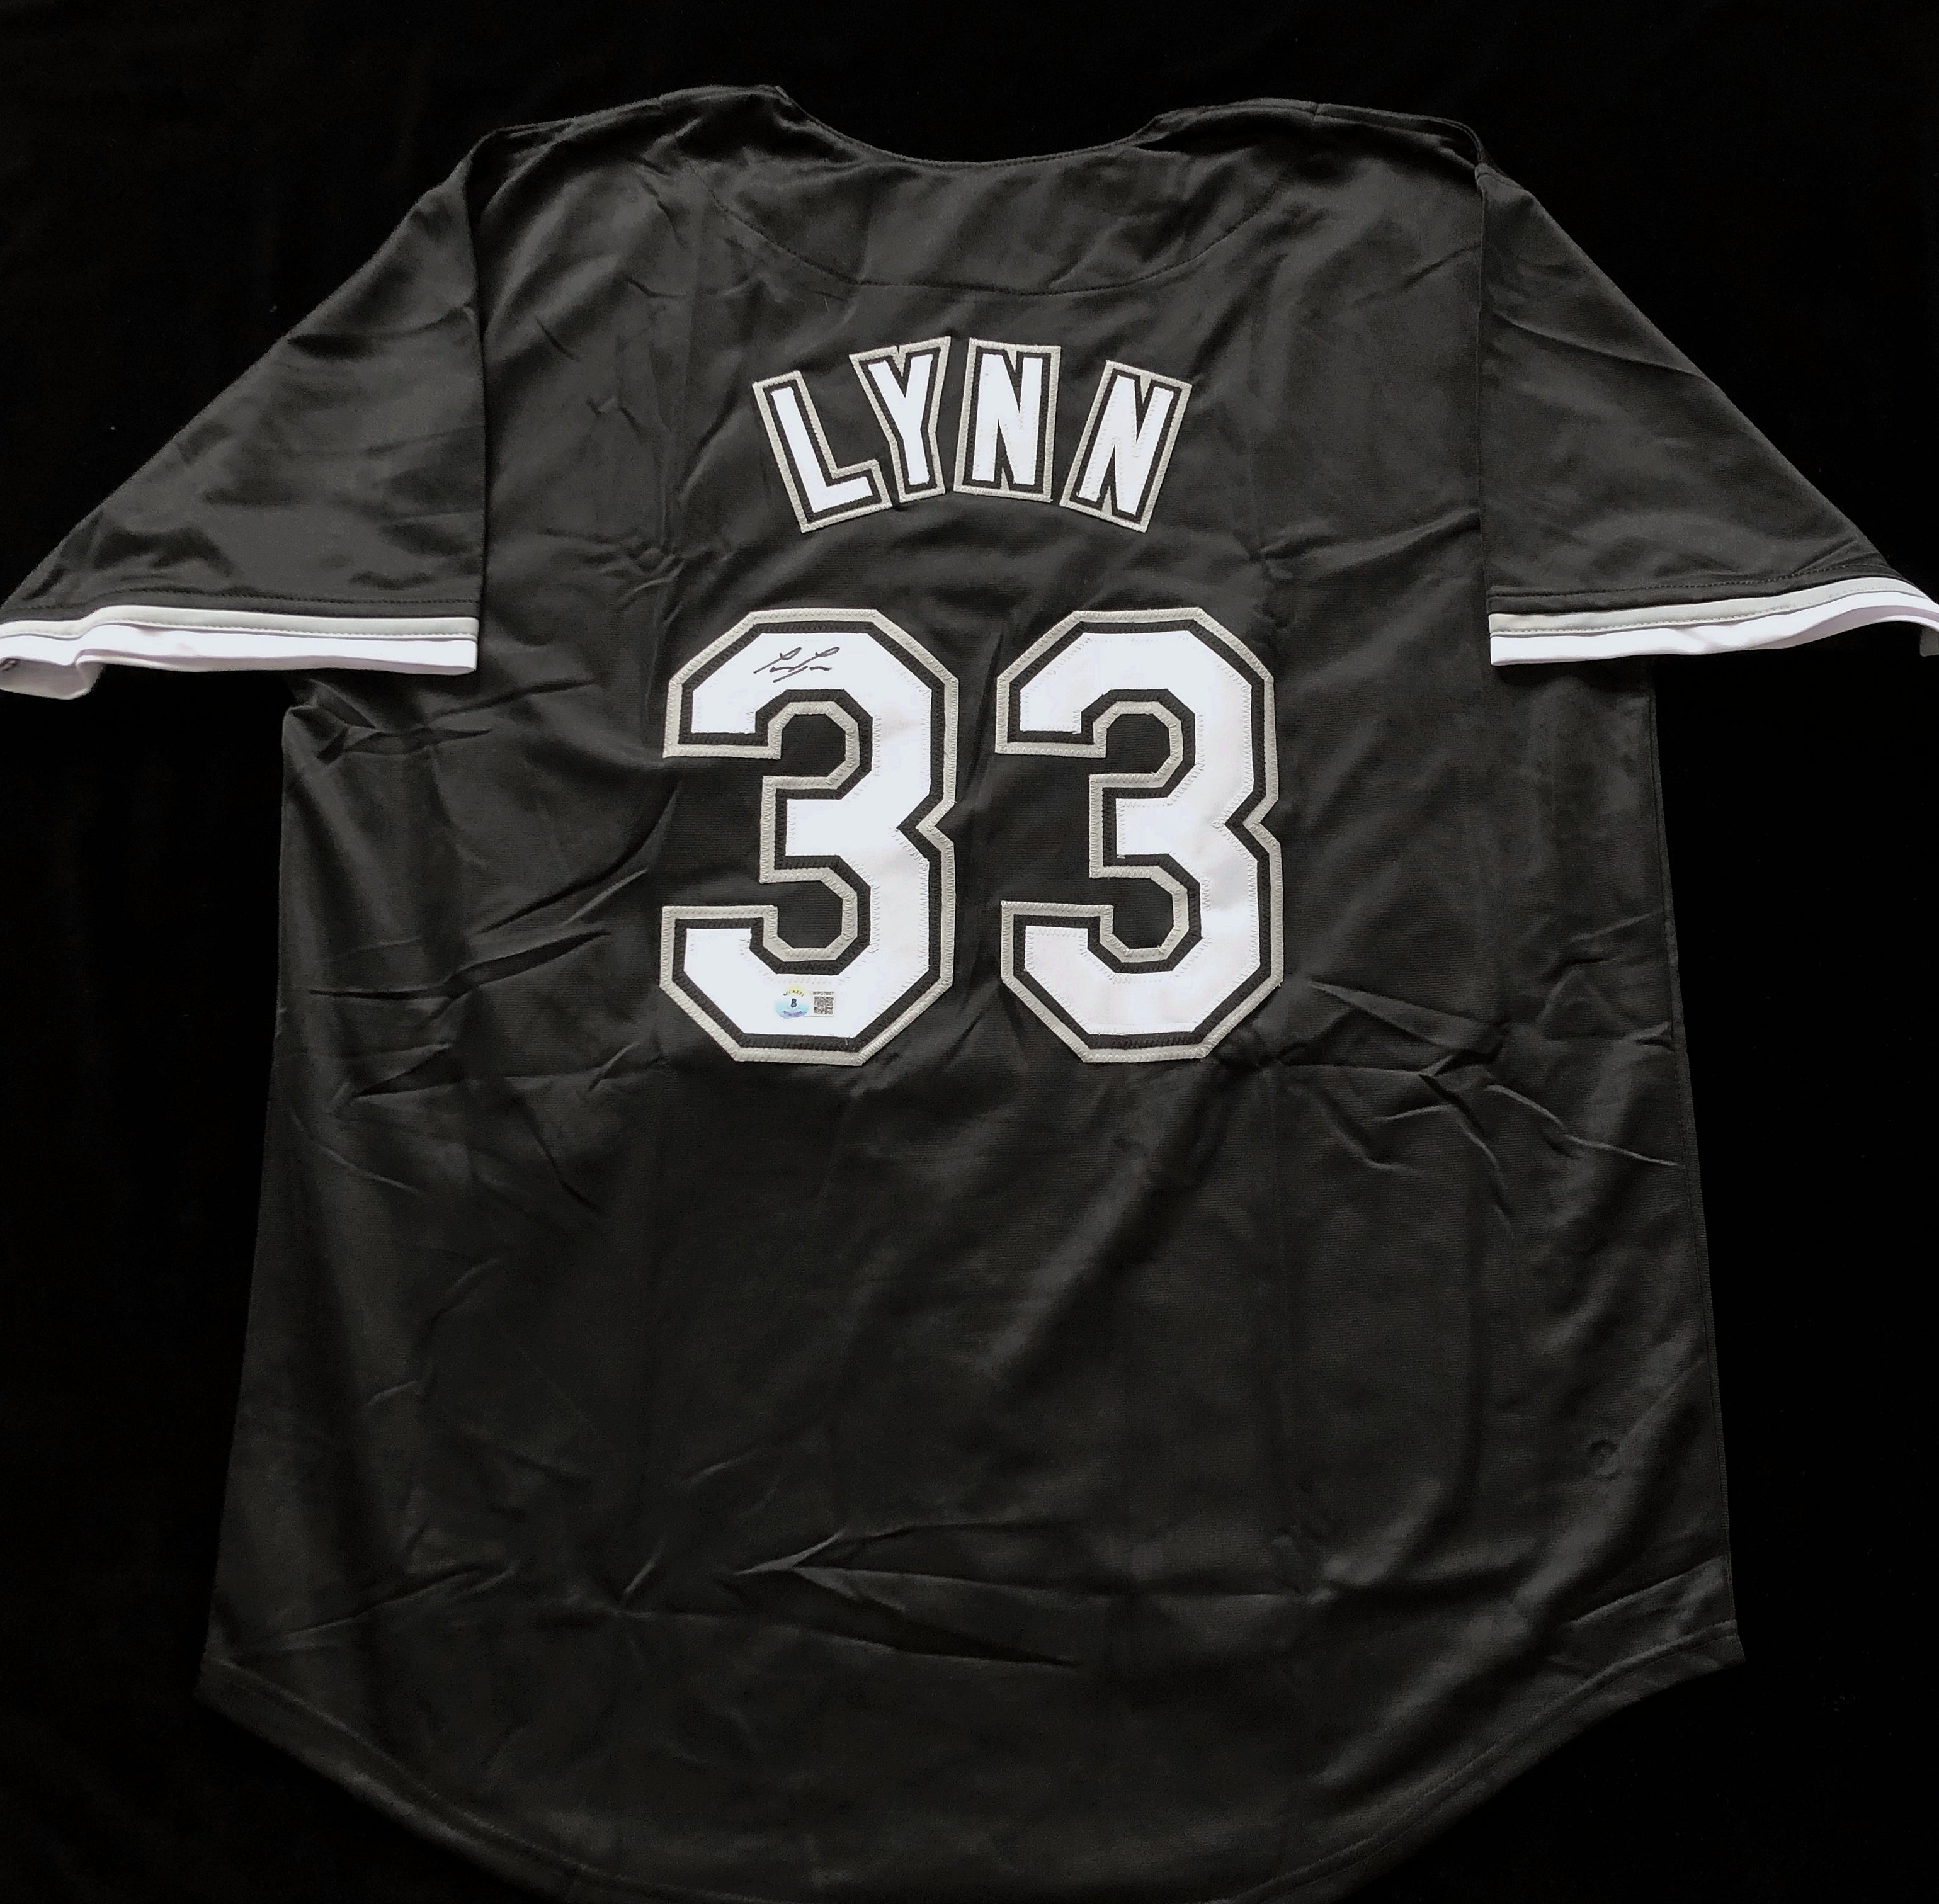 Lance Lynn Autographed Black Baseball Jersey